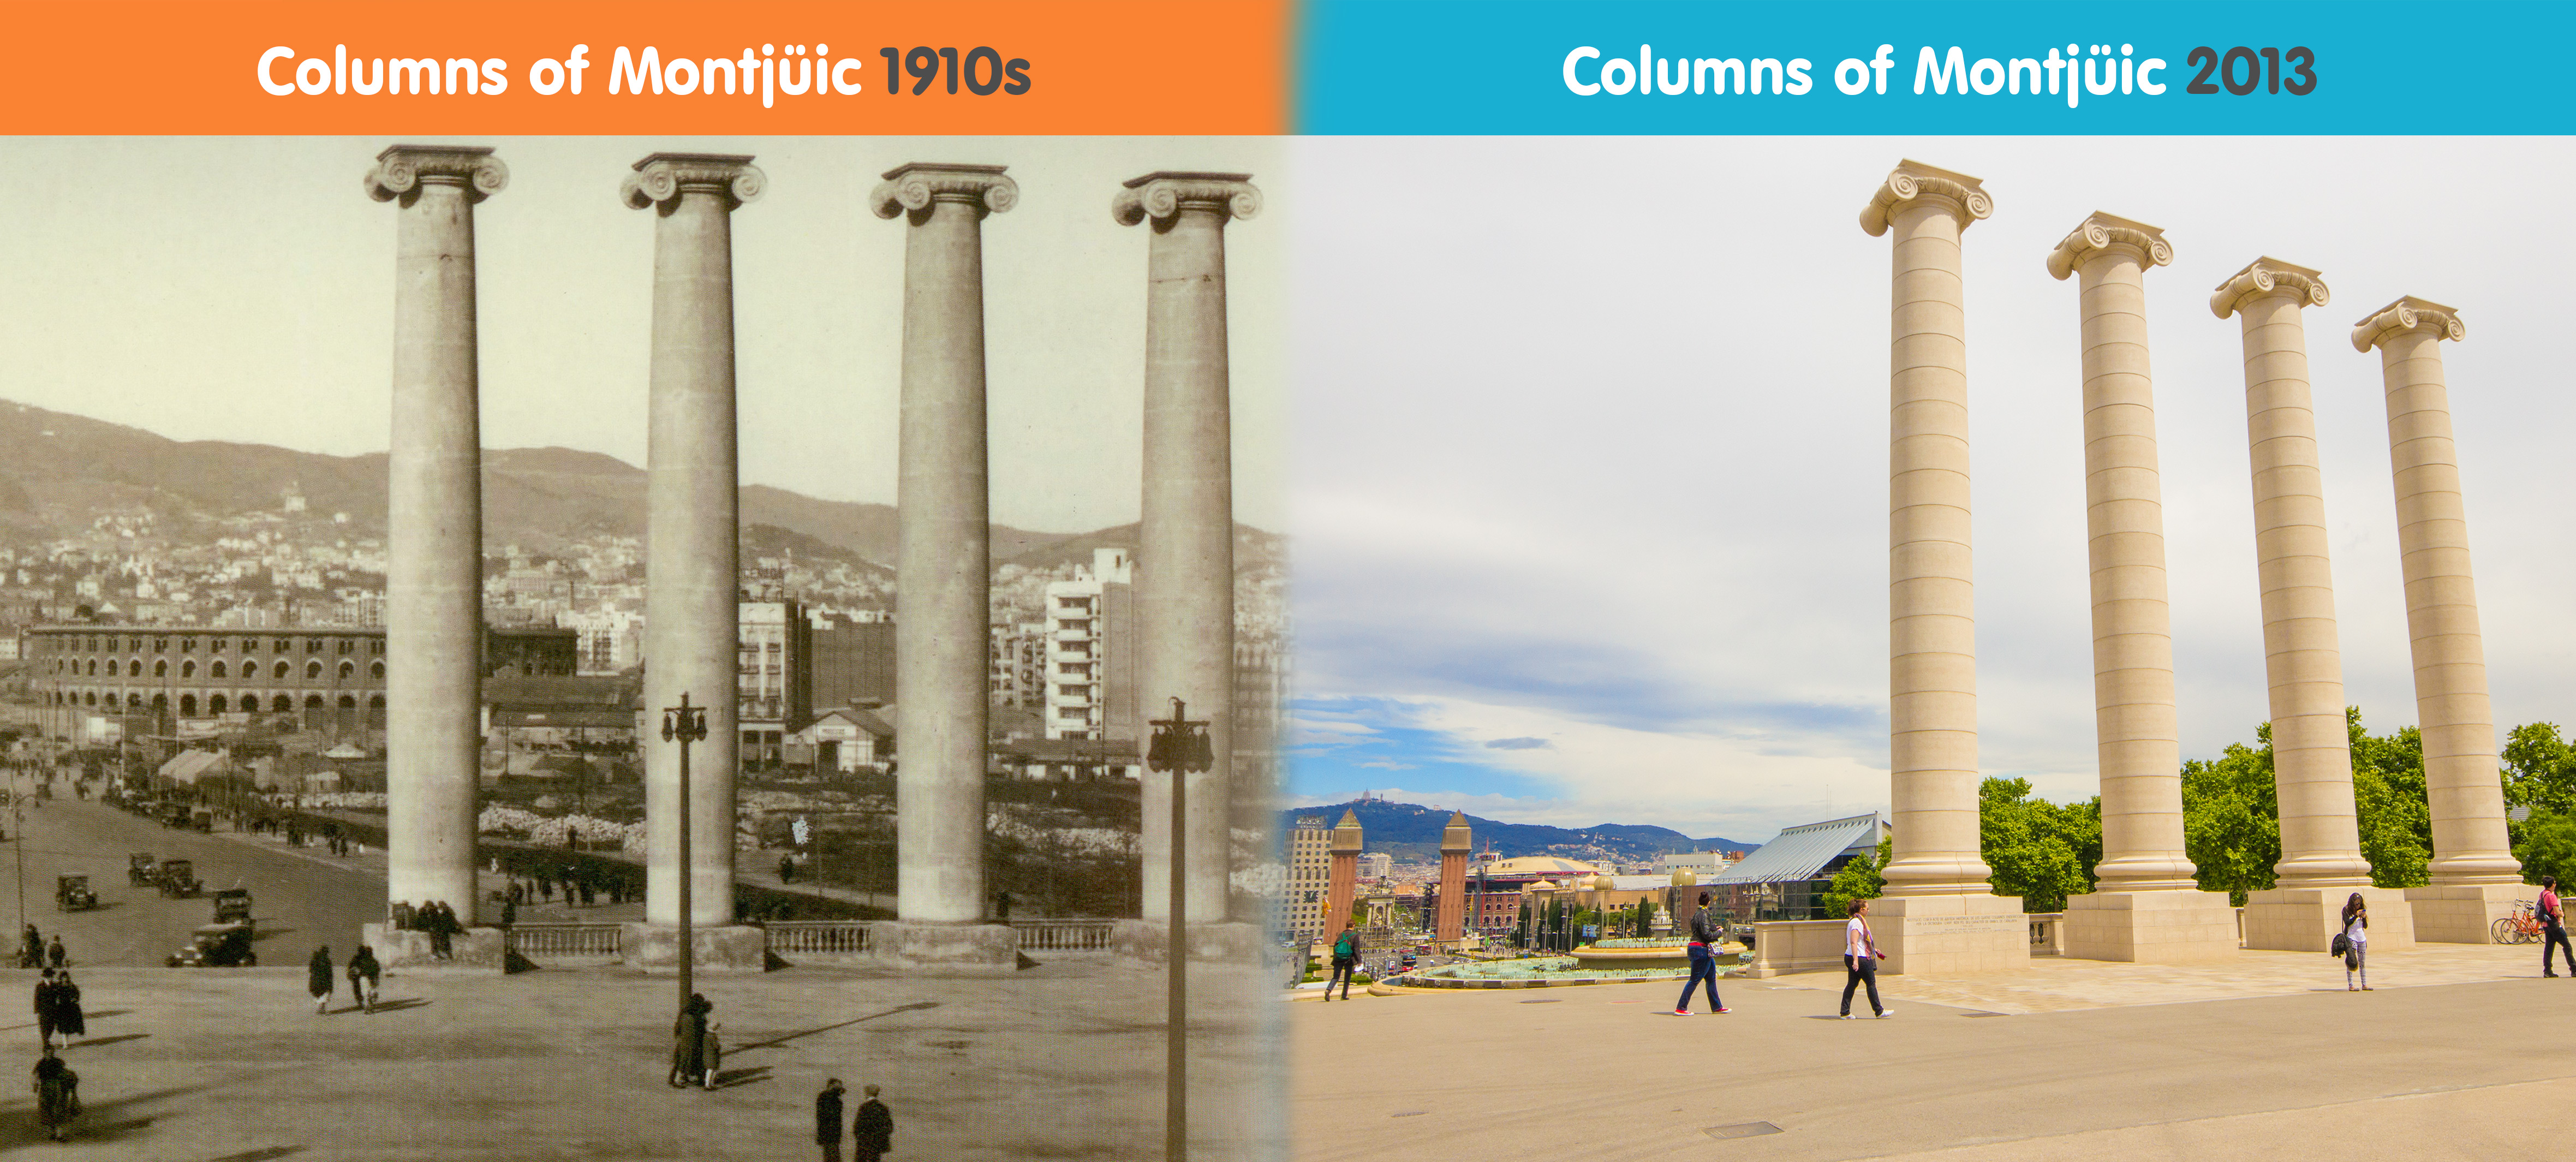 The Columns of Montjuic